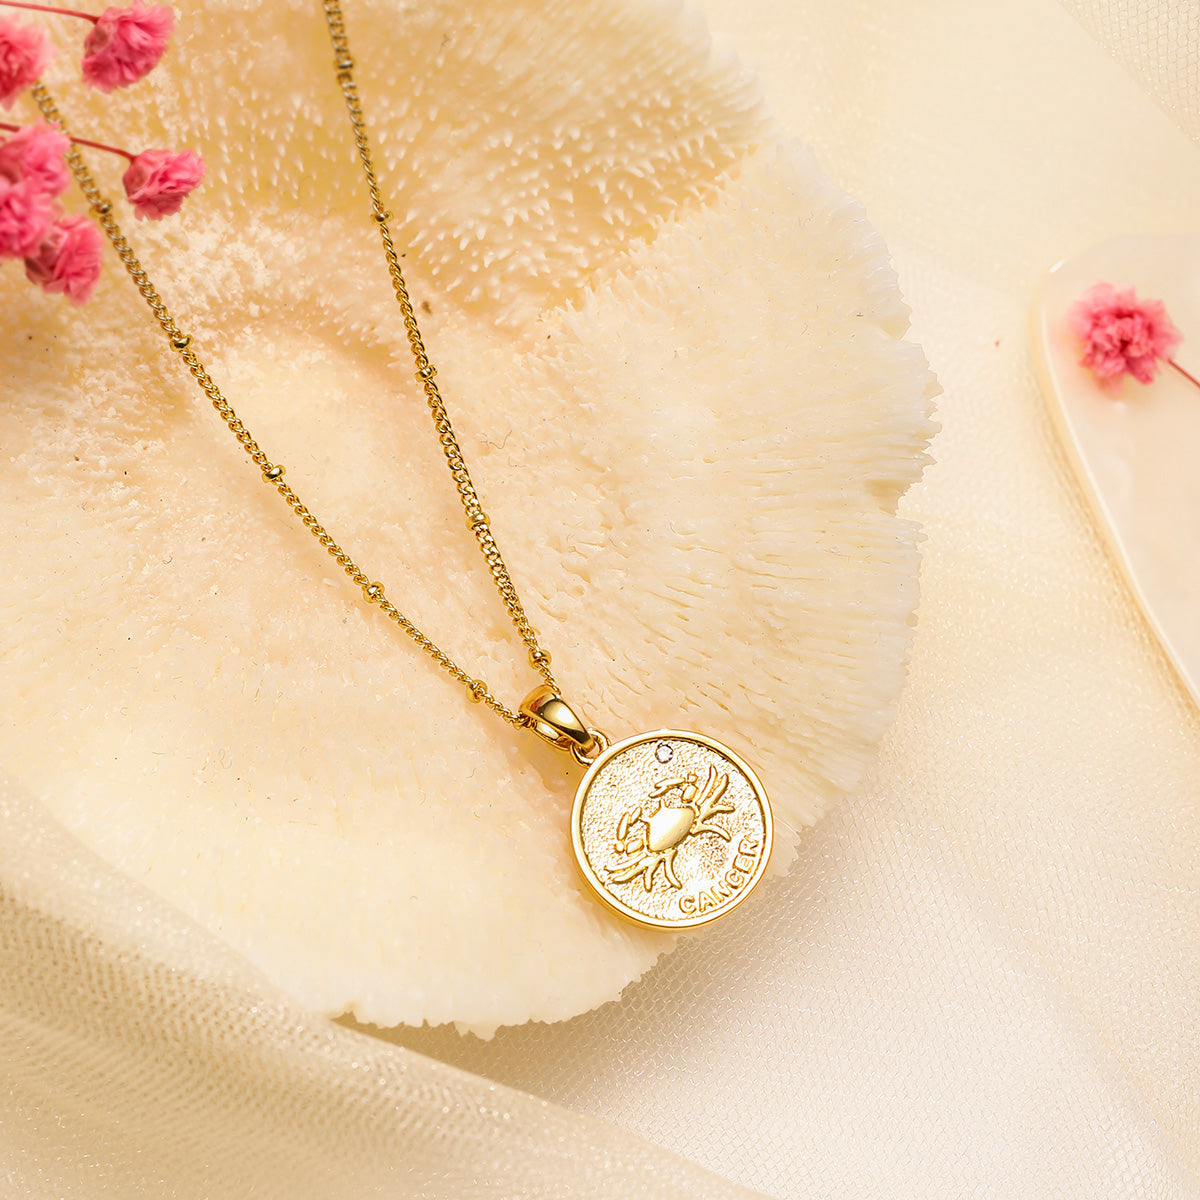 Cancer Constellation Coin Pendant Diamond Necklace